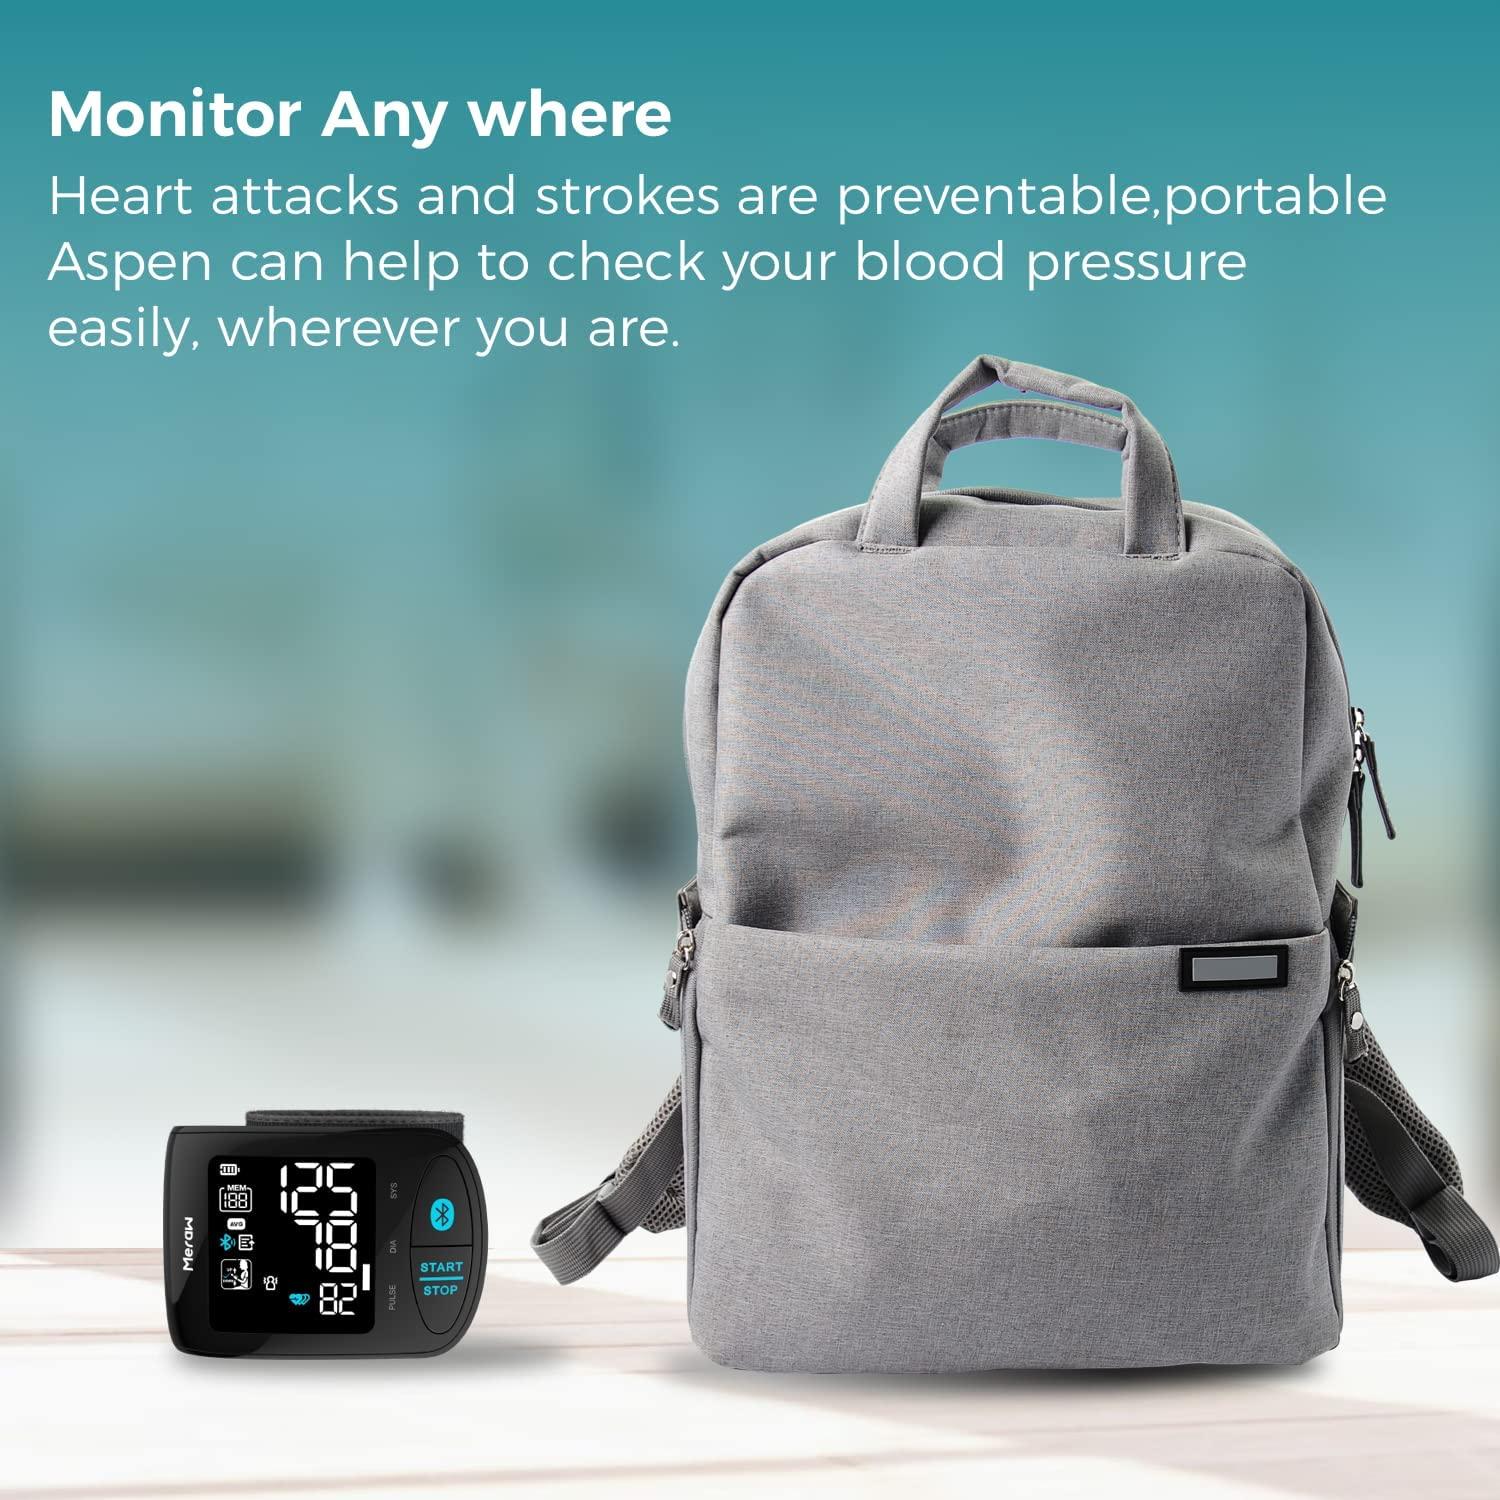 Meraw Cedar Arm Blood Pressure Monitor User Manual